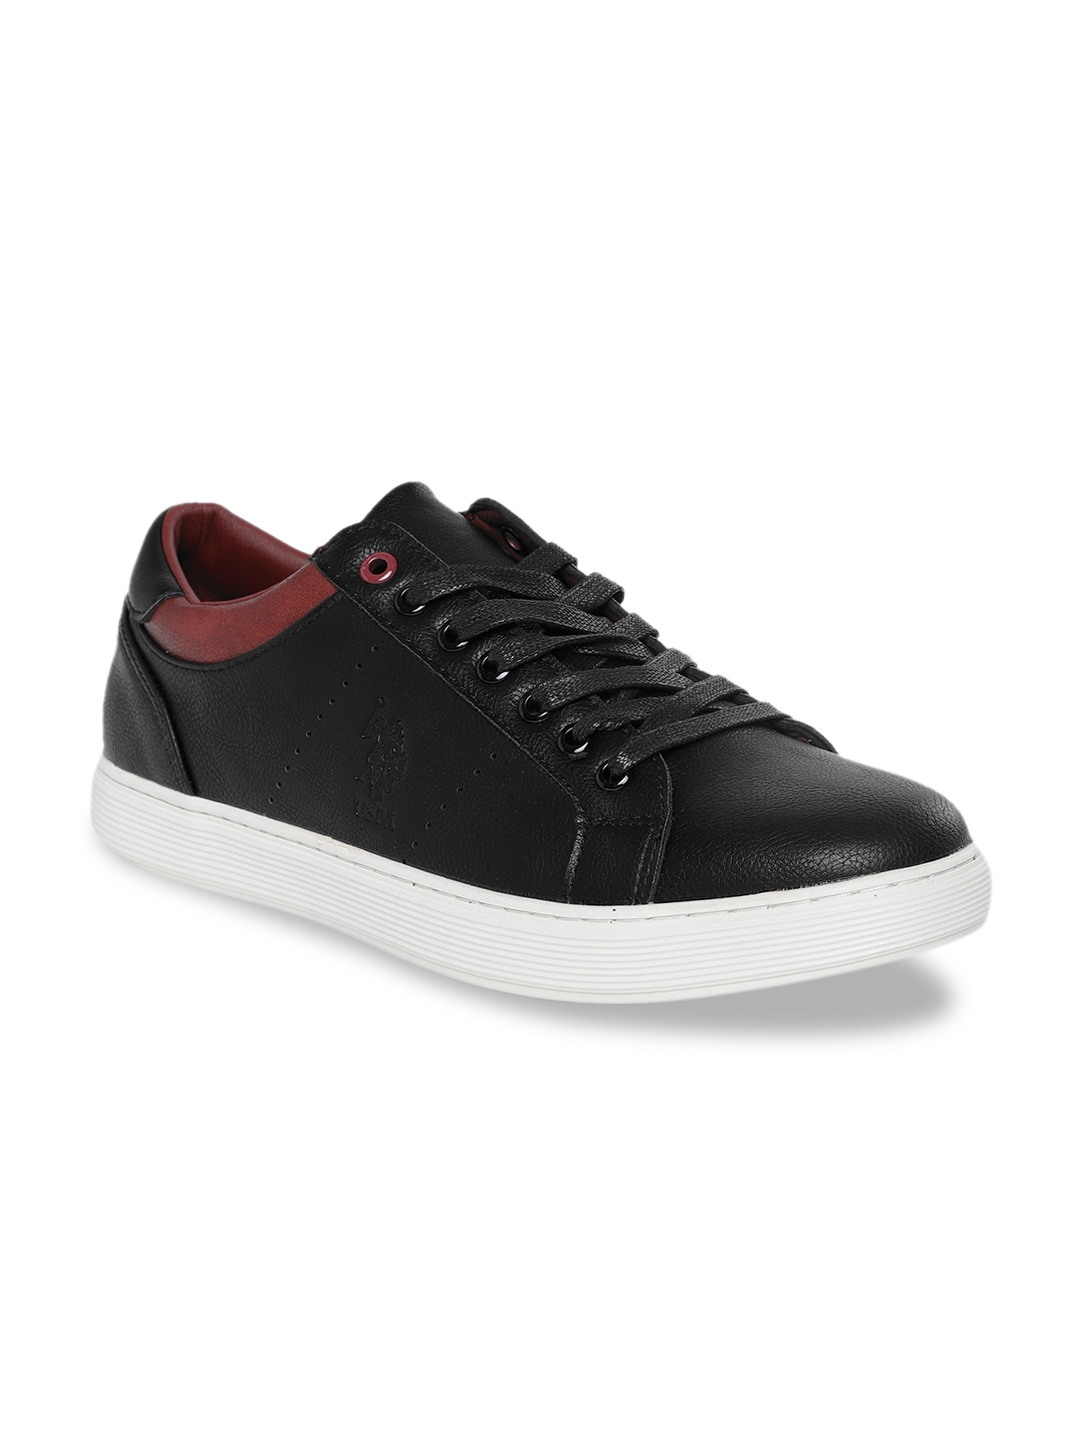 Buy U.S. Polo Assn. Men Black Sneakers - Casual Shoes for Men 10790146 ...